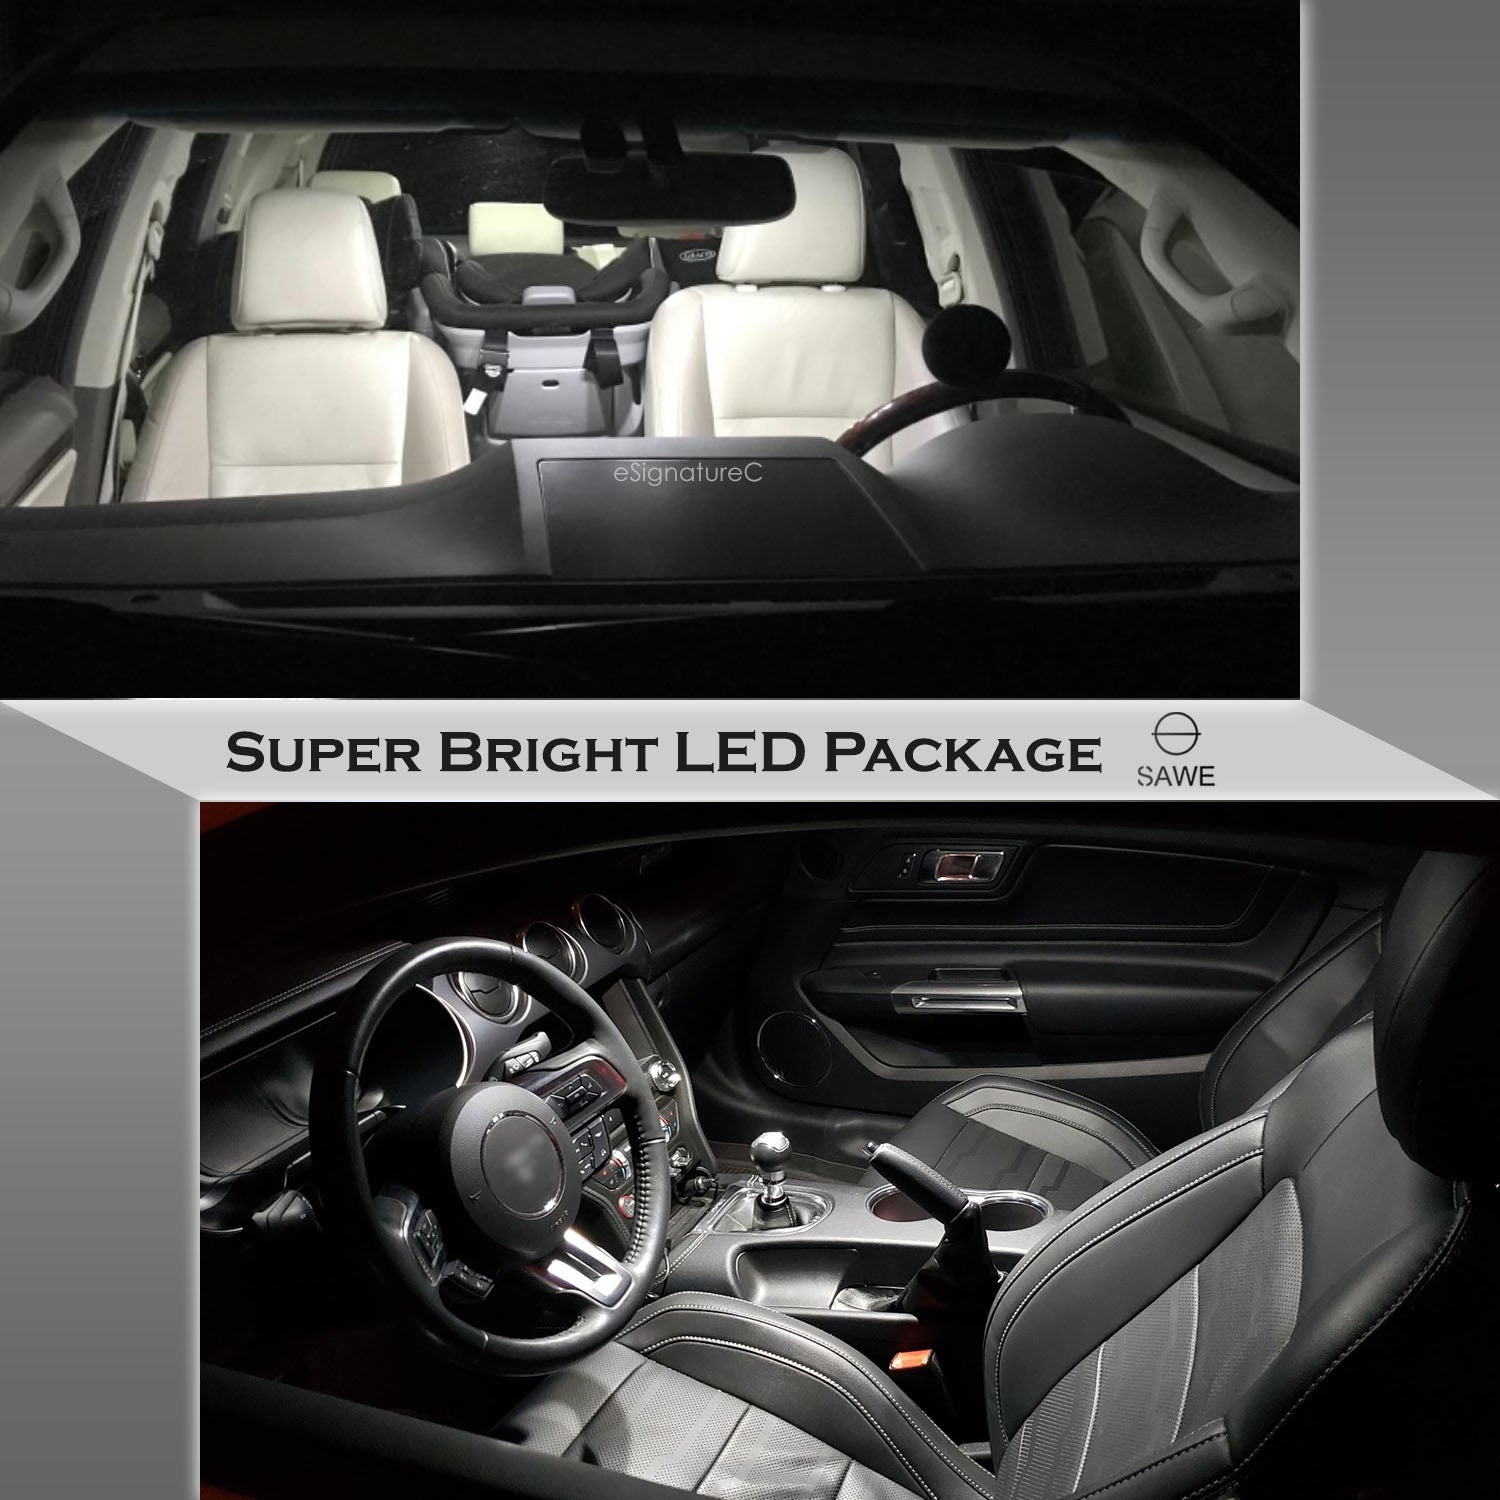 For Dodge Caravan Interior LED Lights - Dome & Map Lights Package Kit for 2001 - 2007 - White